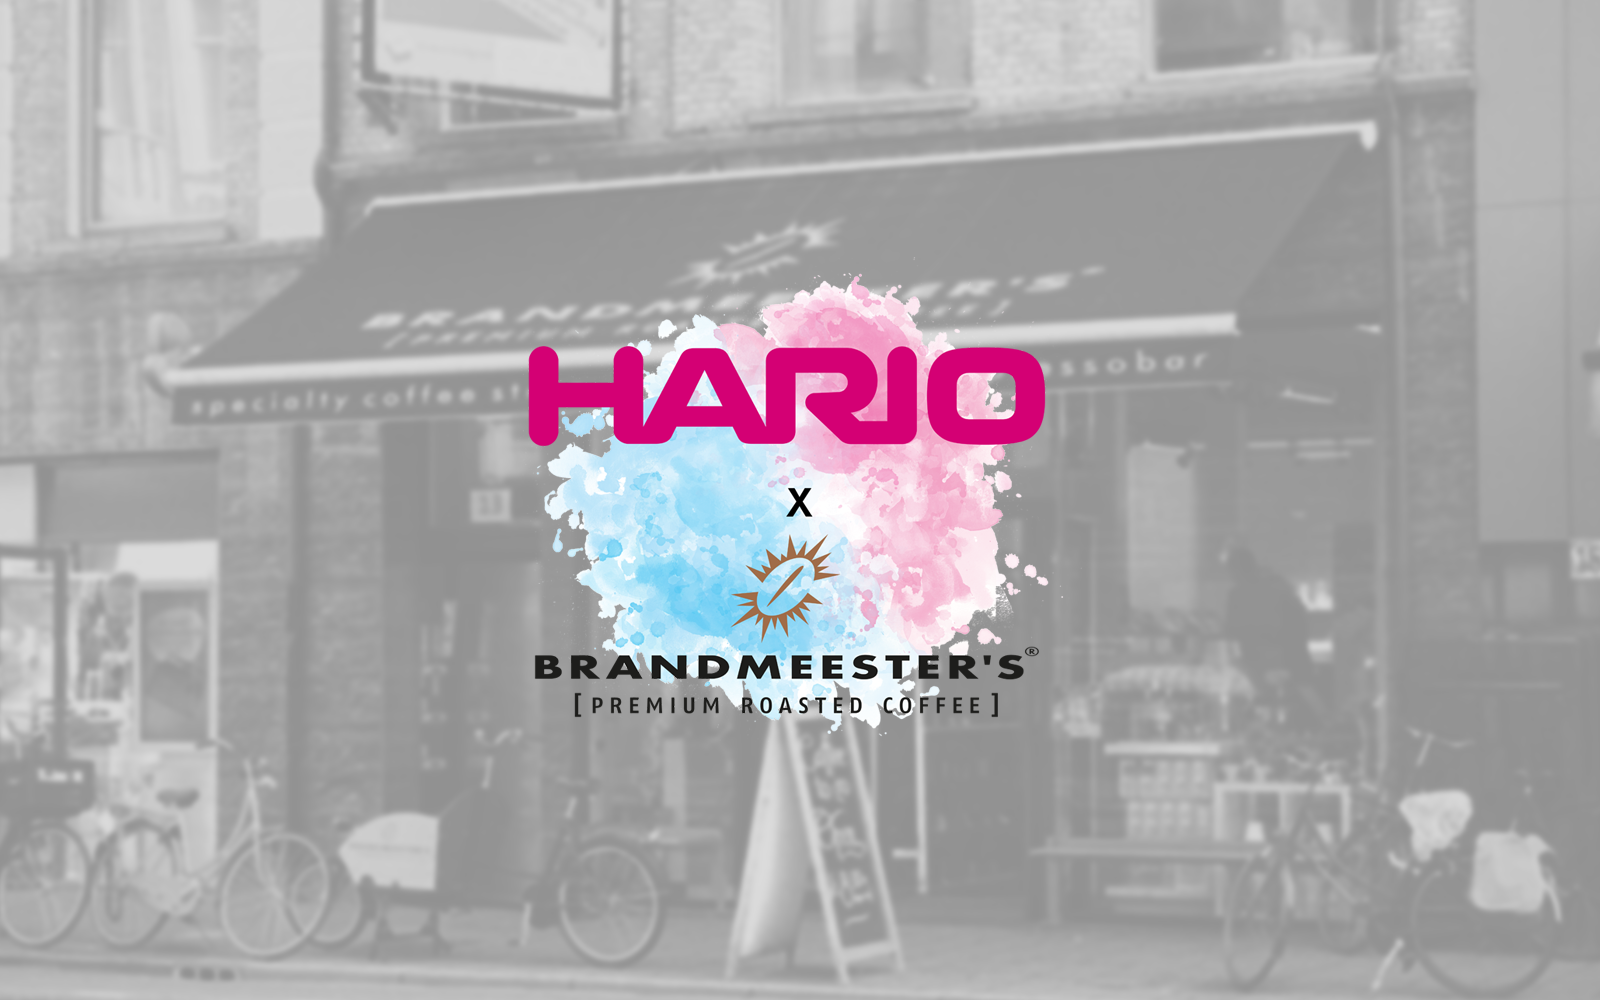 HARIO Brandmeester's Pop-Up Store collaboration